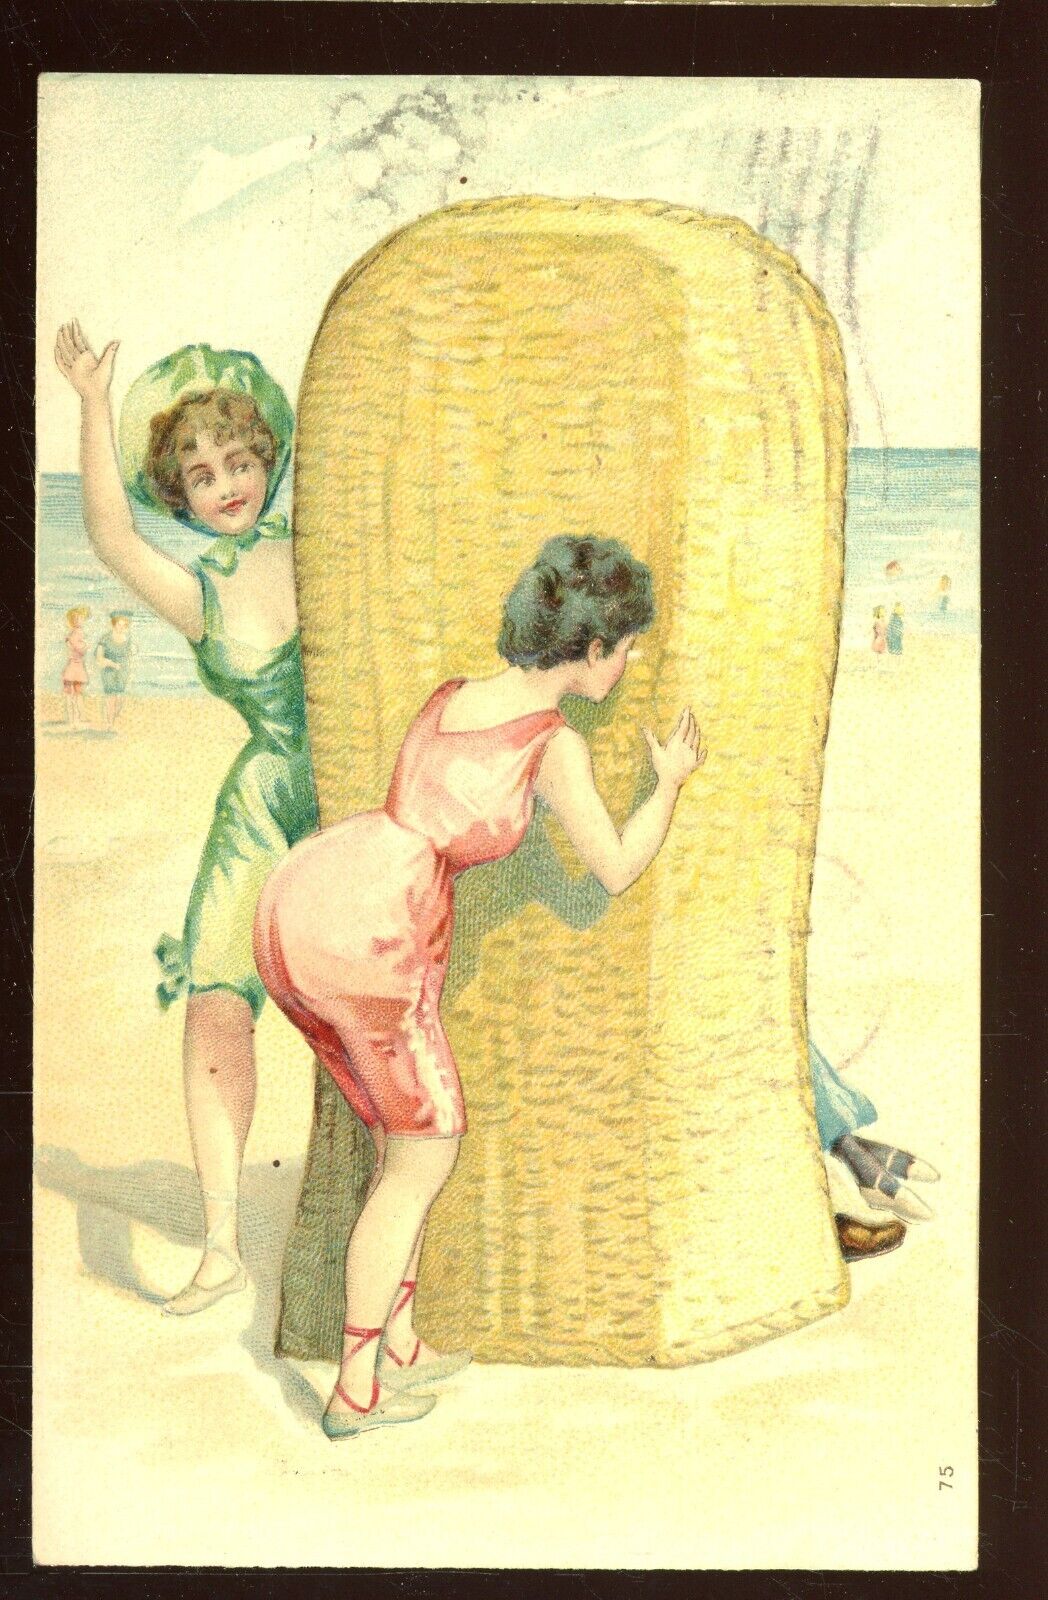 1906-Beach activity-2 women on the prowl